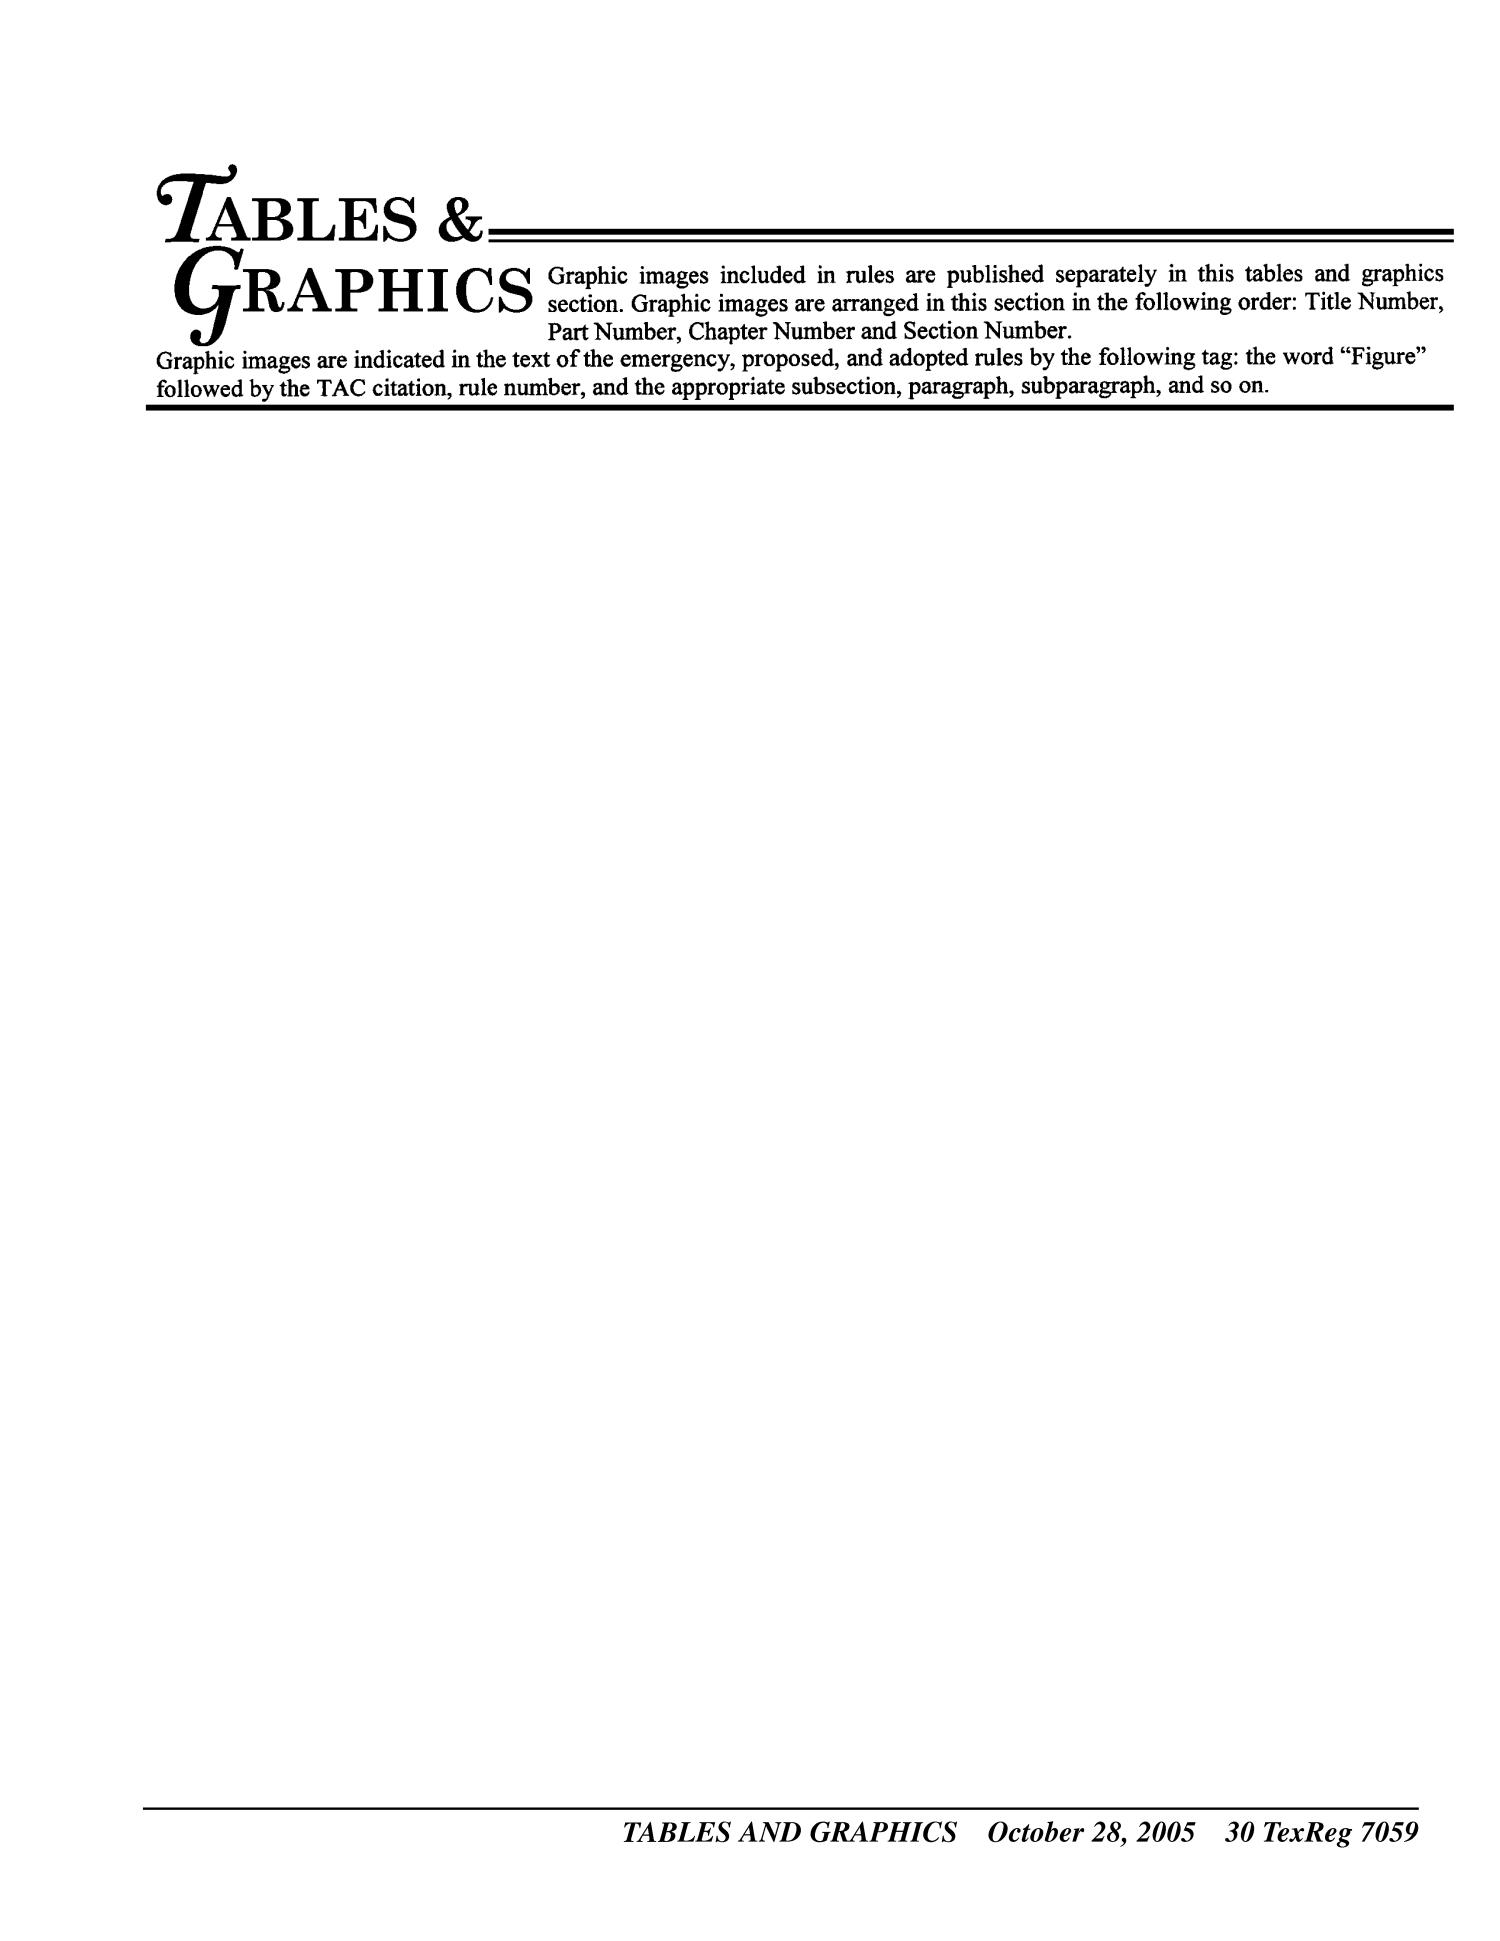 Texas Register, Volume 30, Number 43, Pages 6973-7094, October 28, 2005
                                                
                                                    7059
                                                